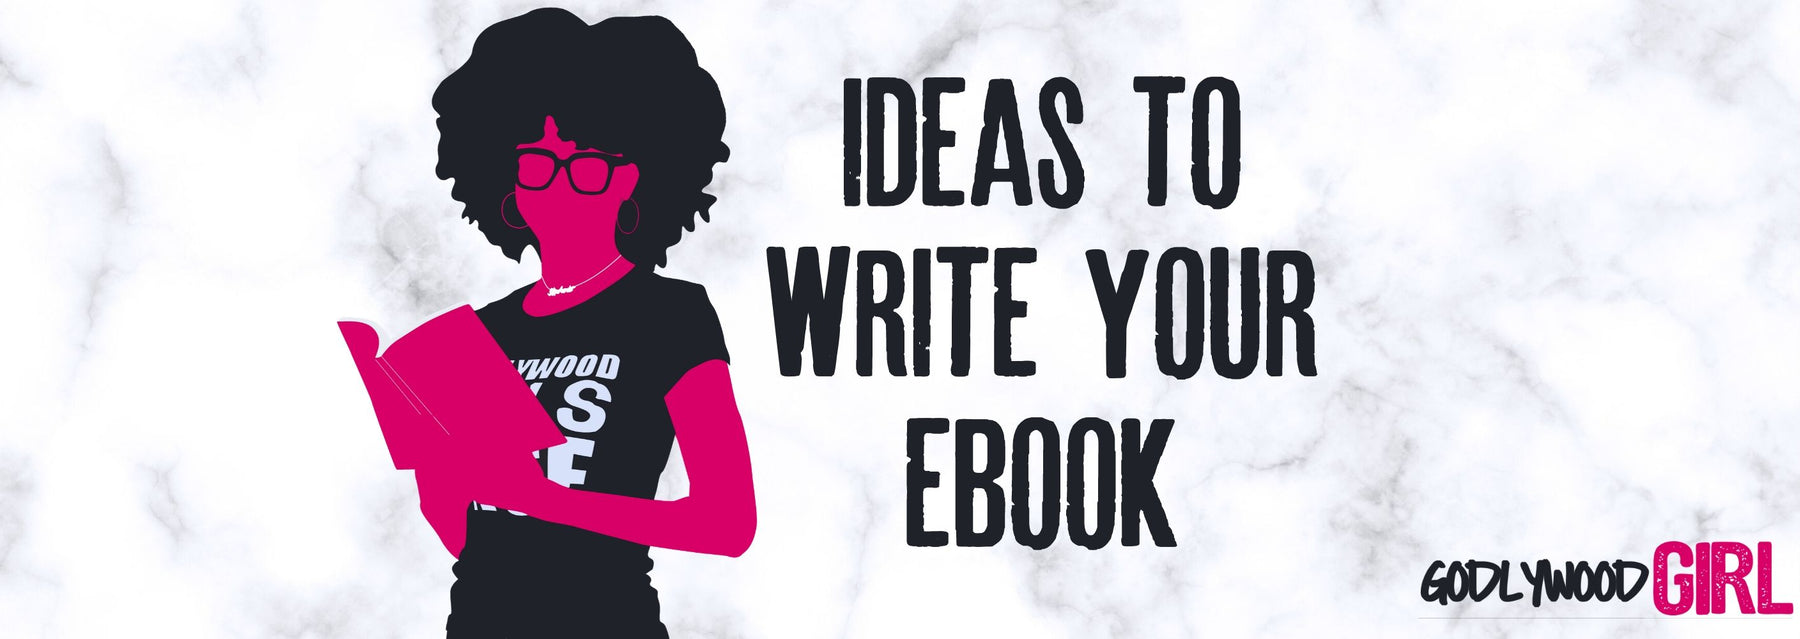 IDEAS FOR EBOOKS | HOW TO WRITE AN EBOOK AND MAKE MONEY | CHRISTIAN ENTREPRENEUR | AUTHORTUBE